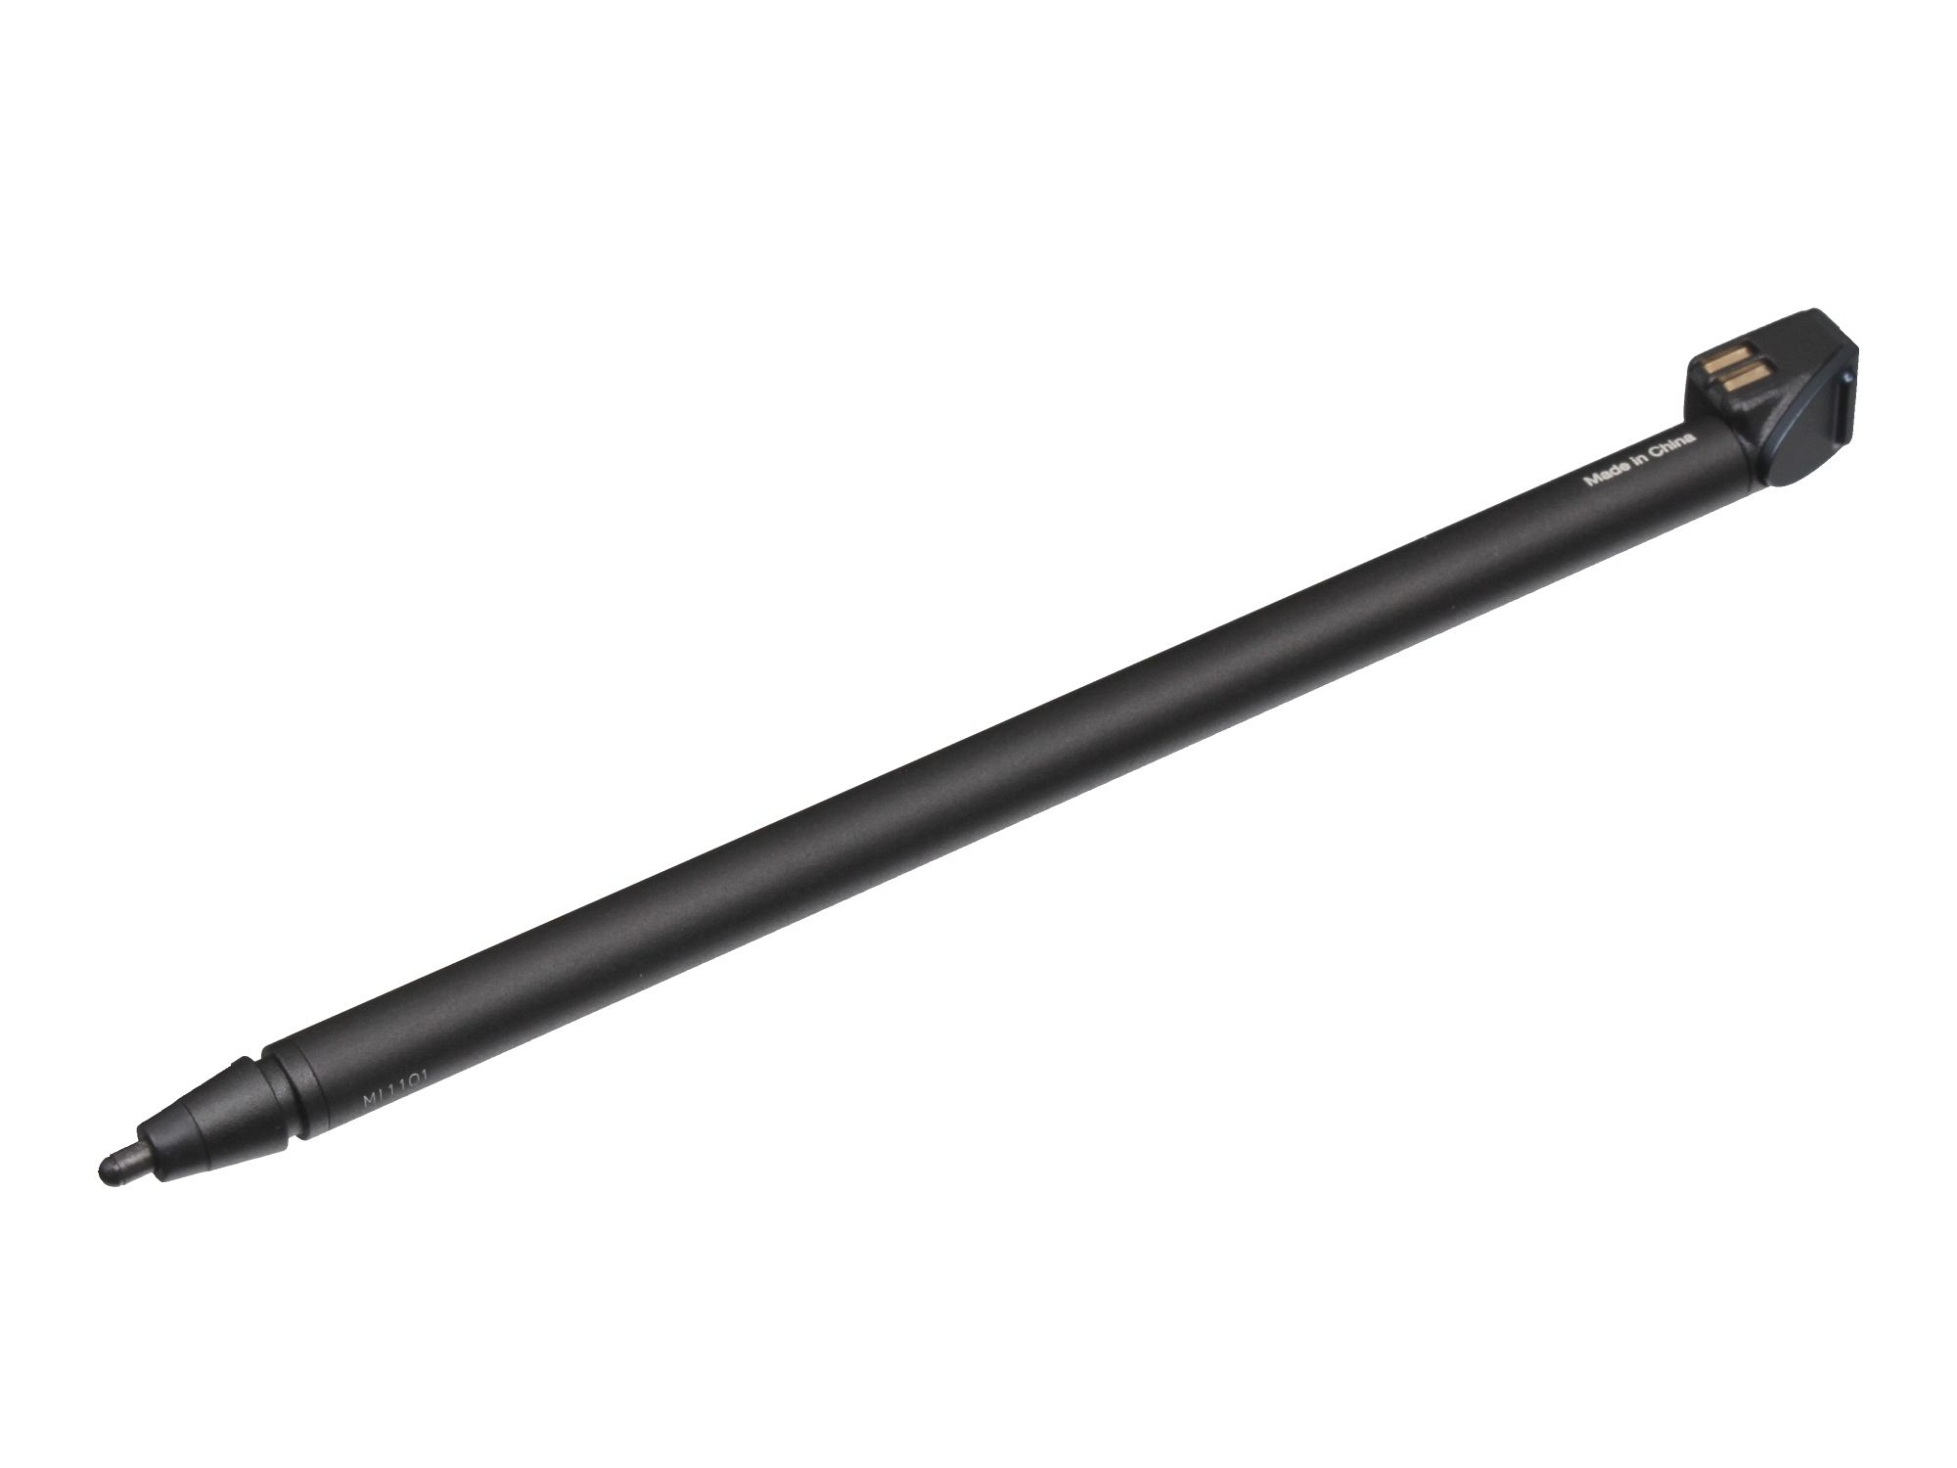 Lenovo MI1101 Stylus Pen